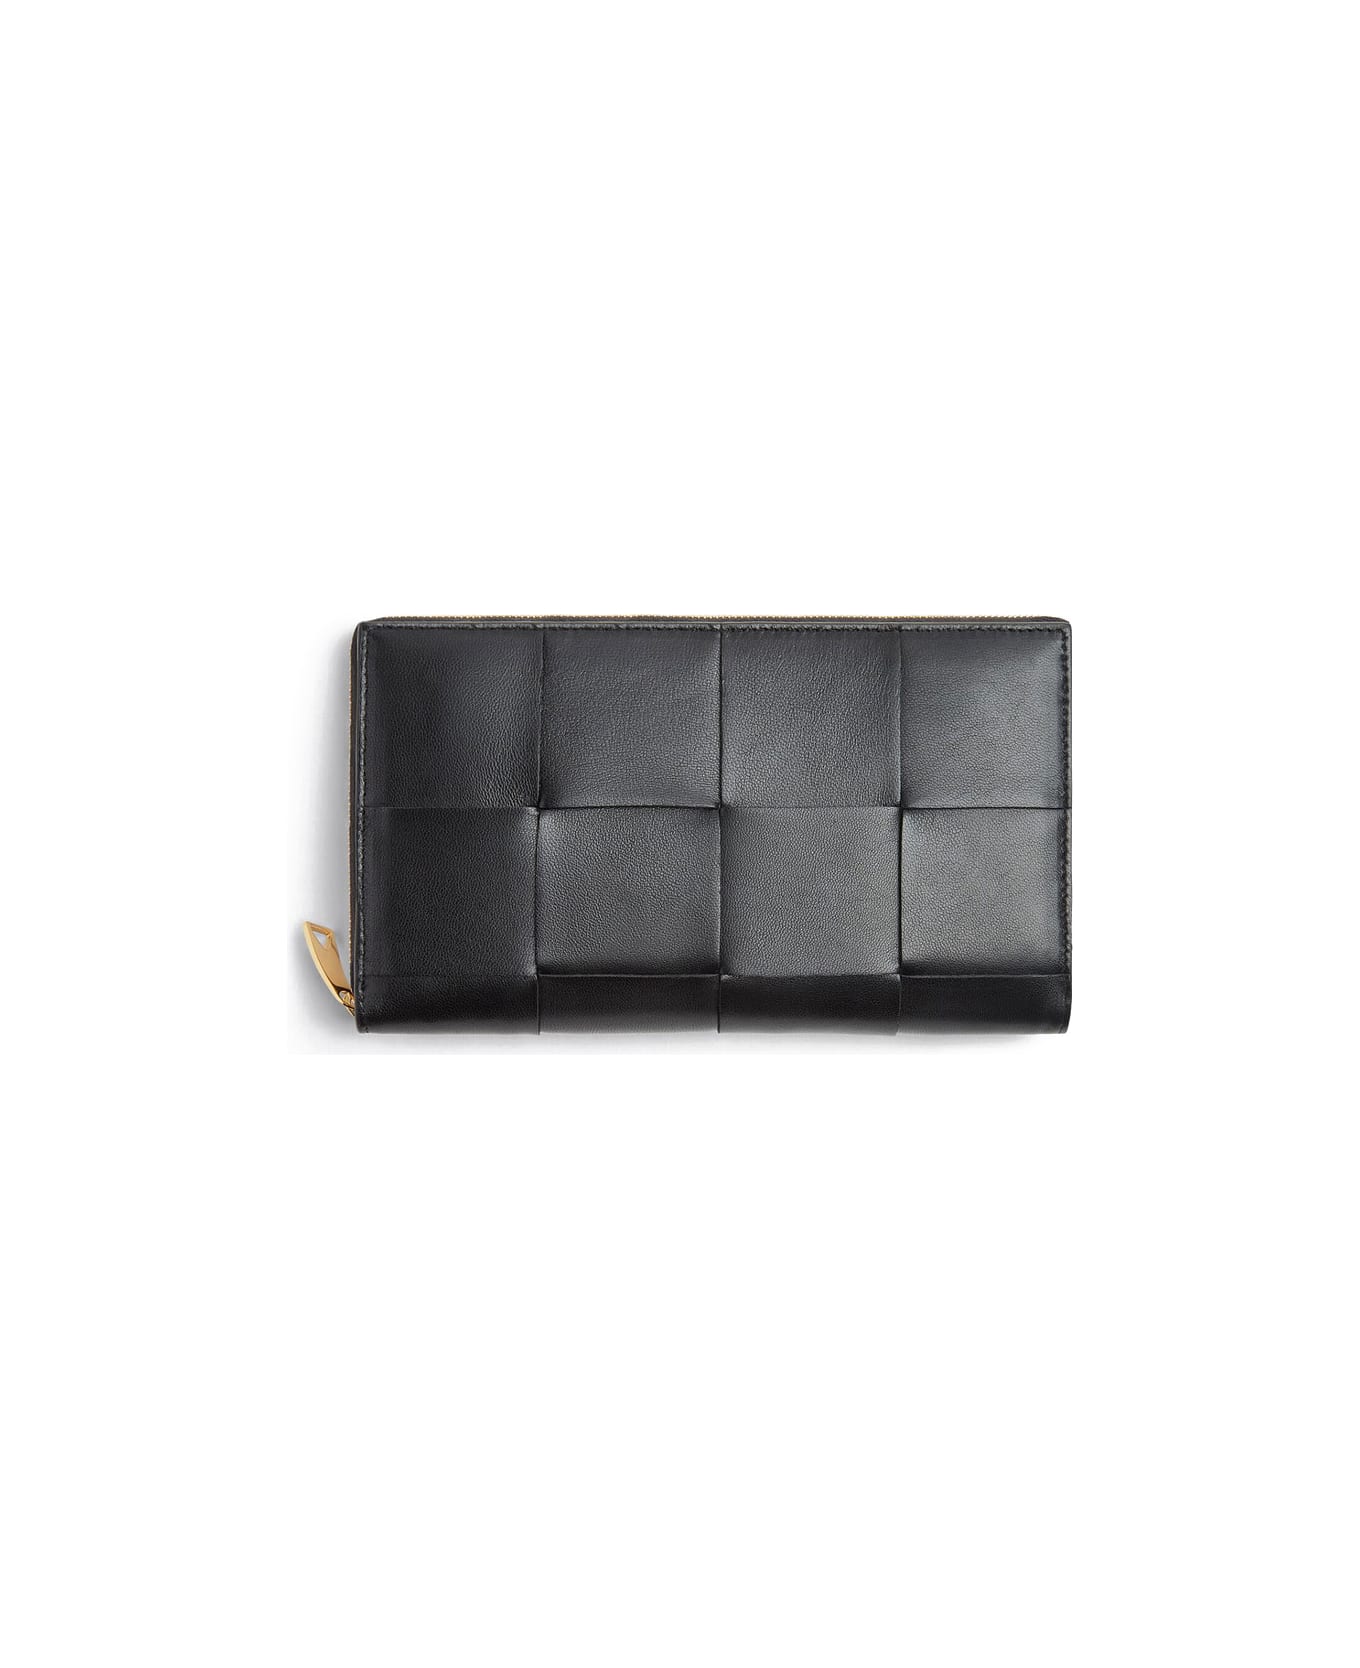 Bottega Veneta Leather Wallet - BLACK